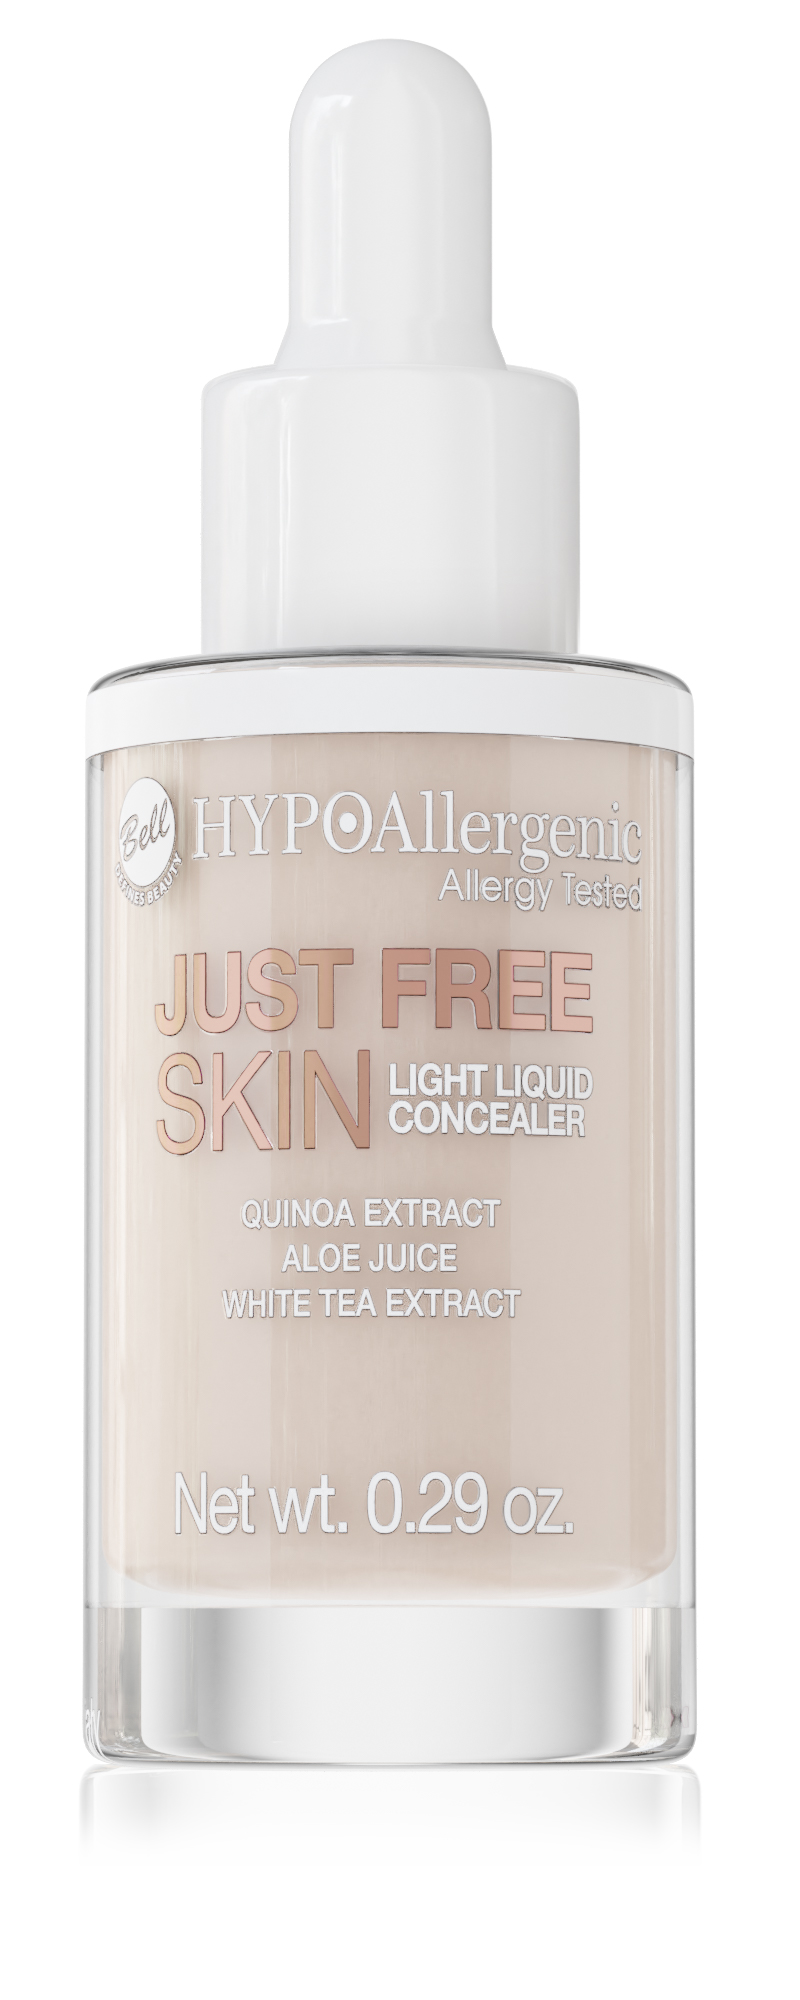 HYPOAllergenic Just Free Skin Light Liquid Concealer